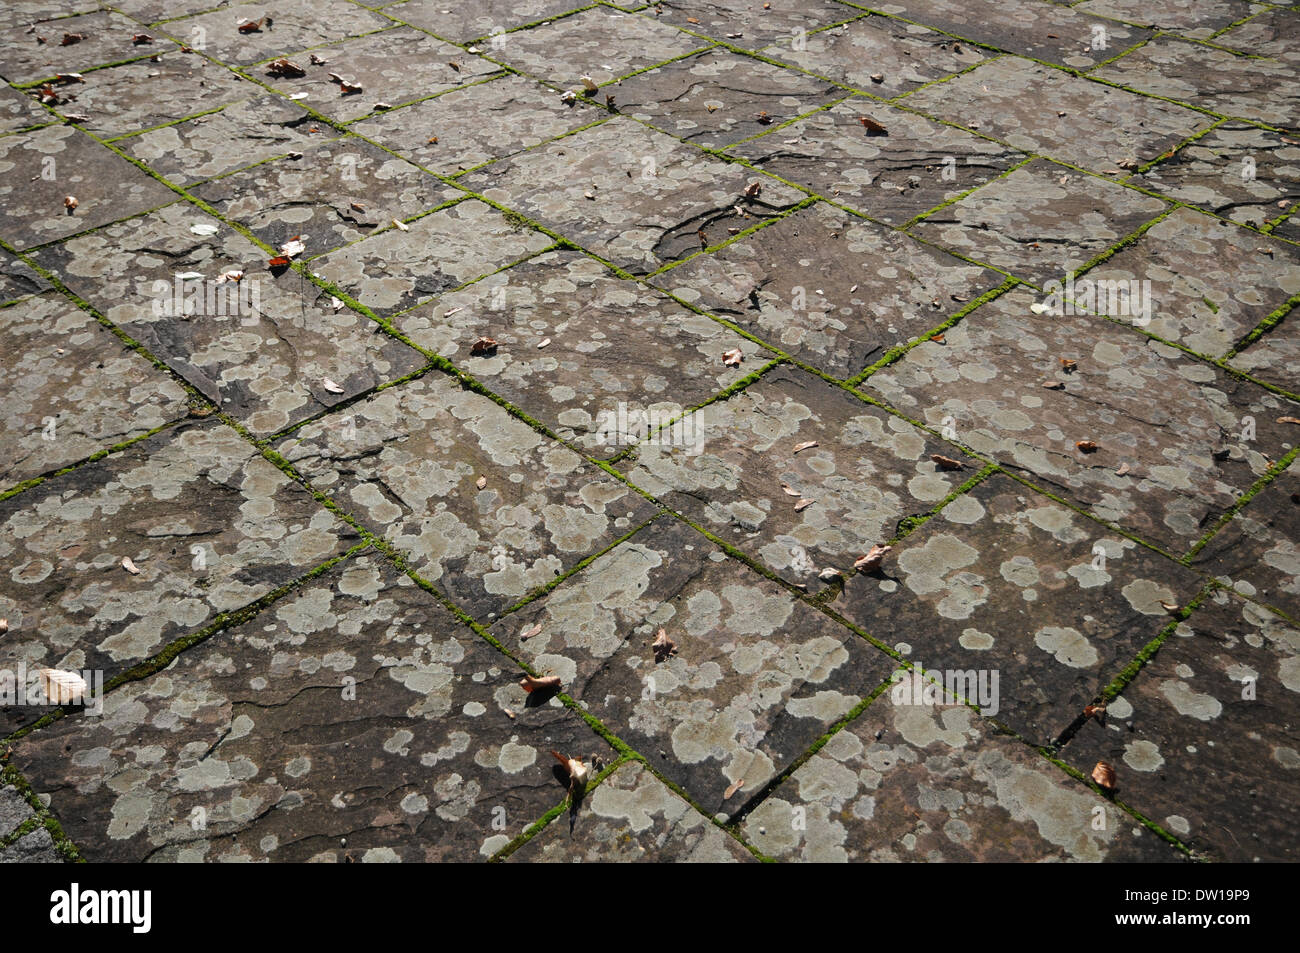 Porphyr-pavement with lichen Stock Photo